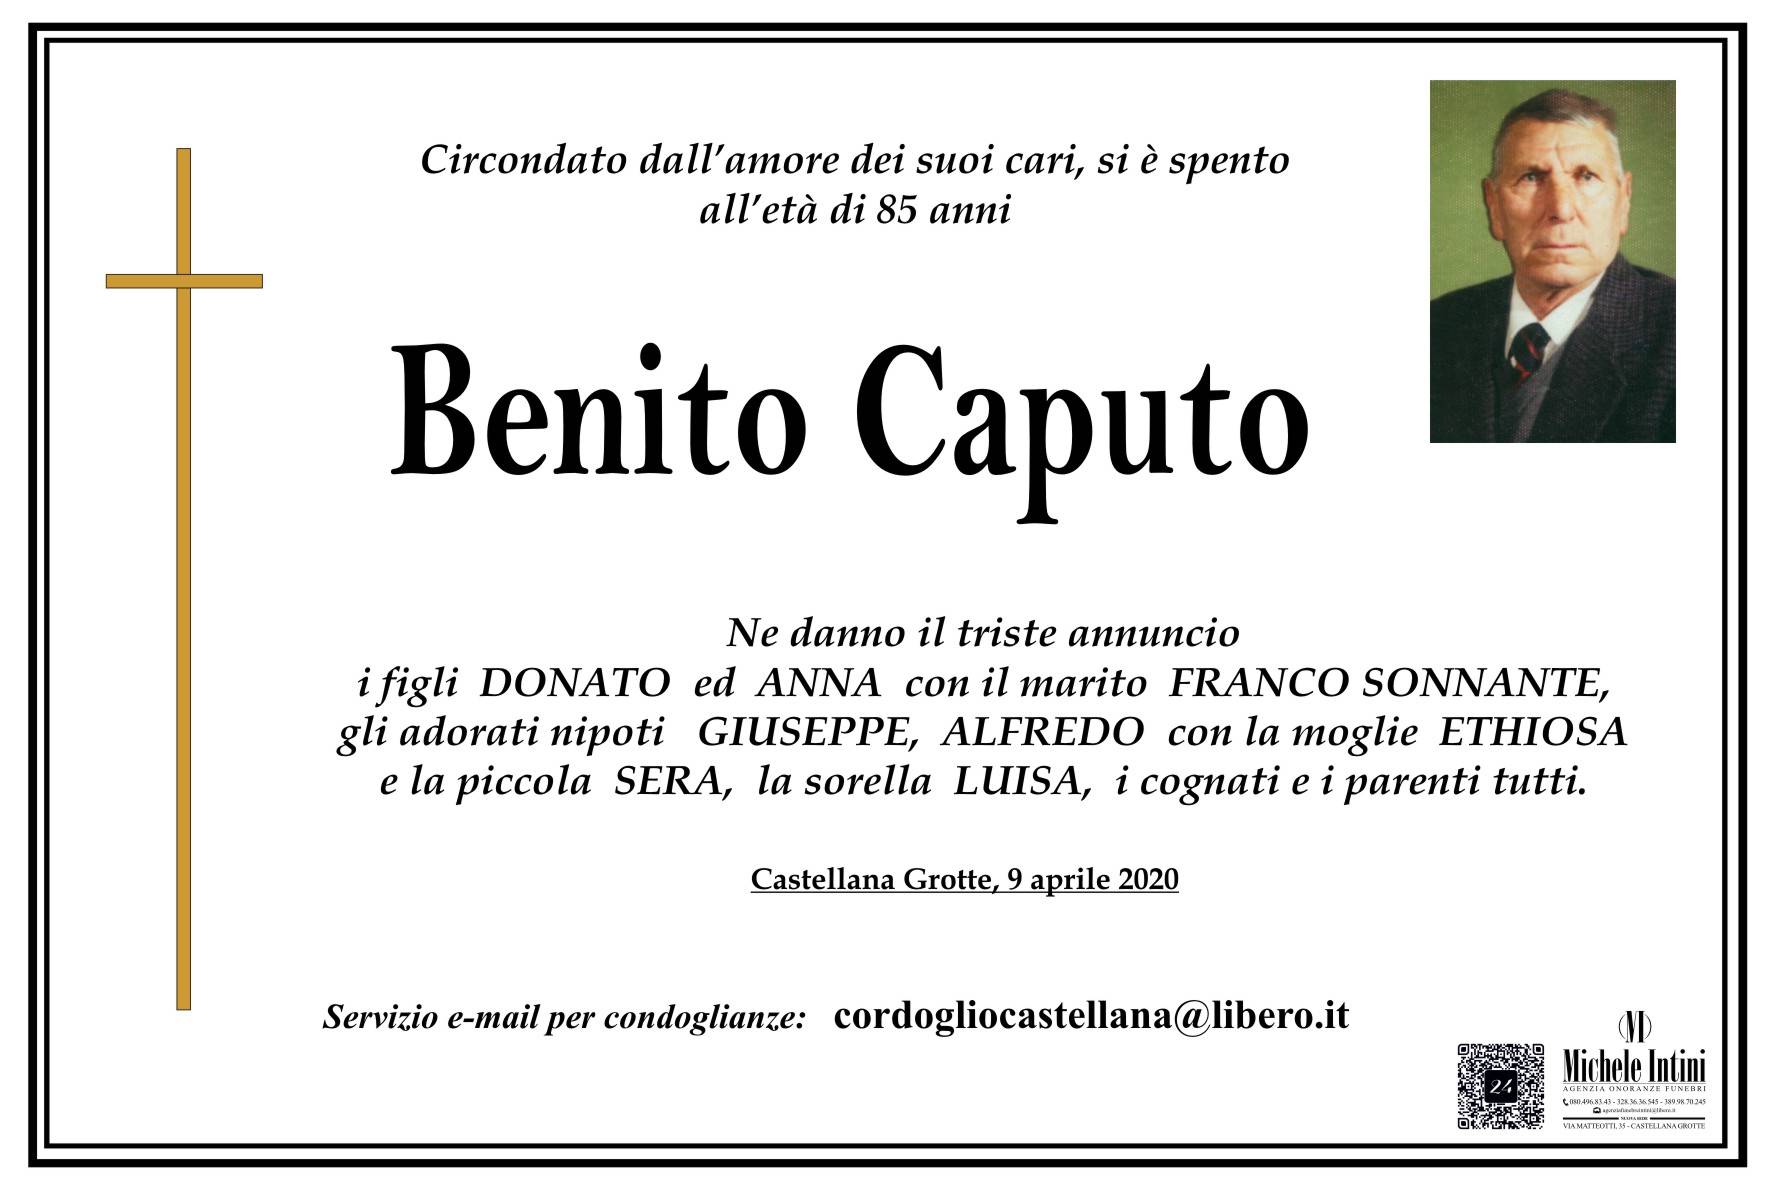 Benito Caputo